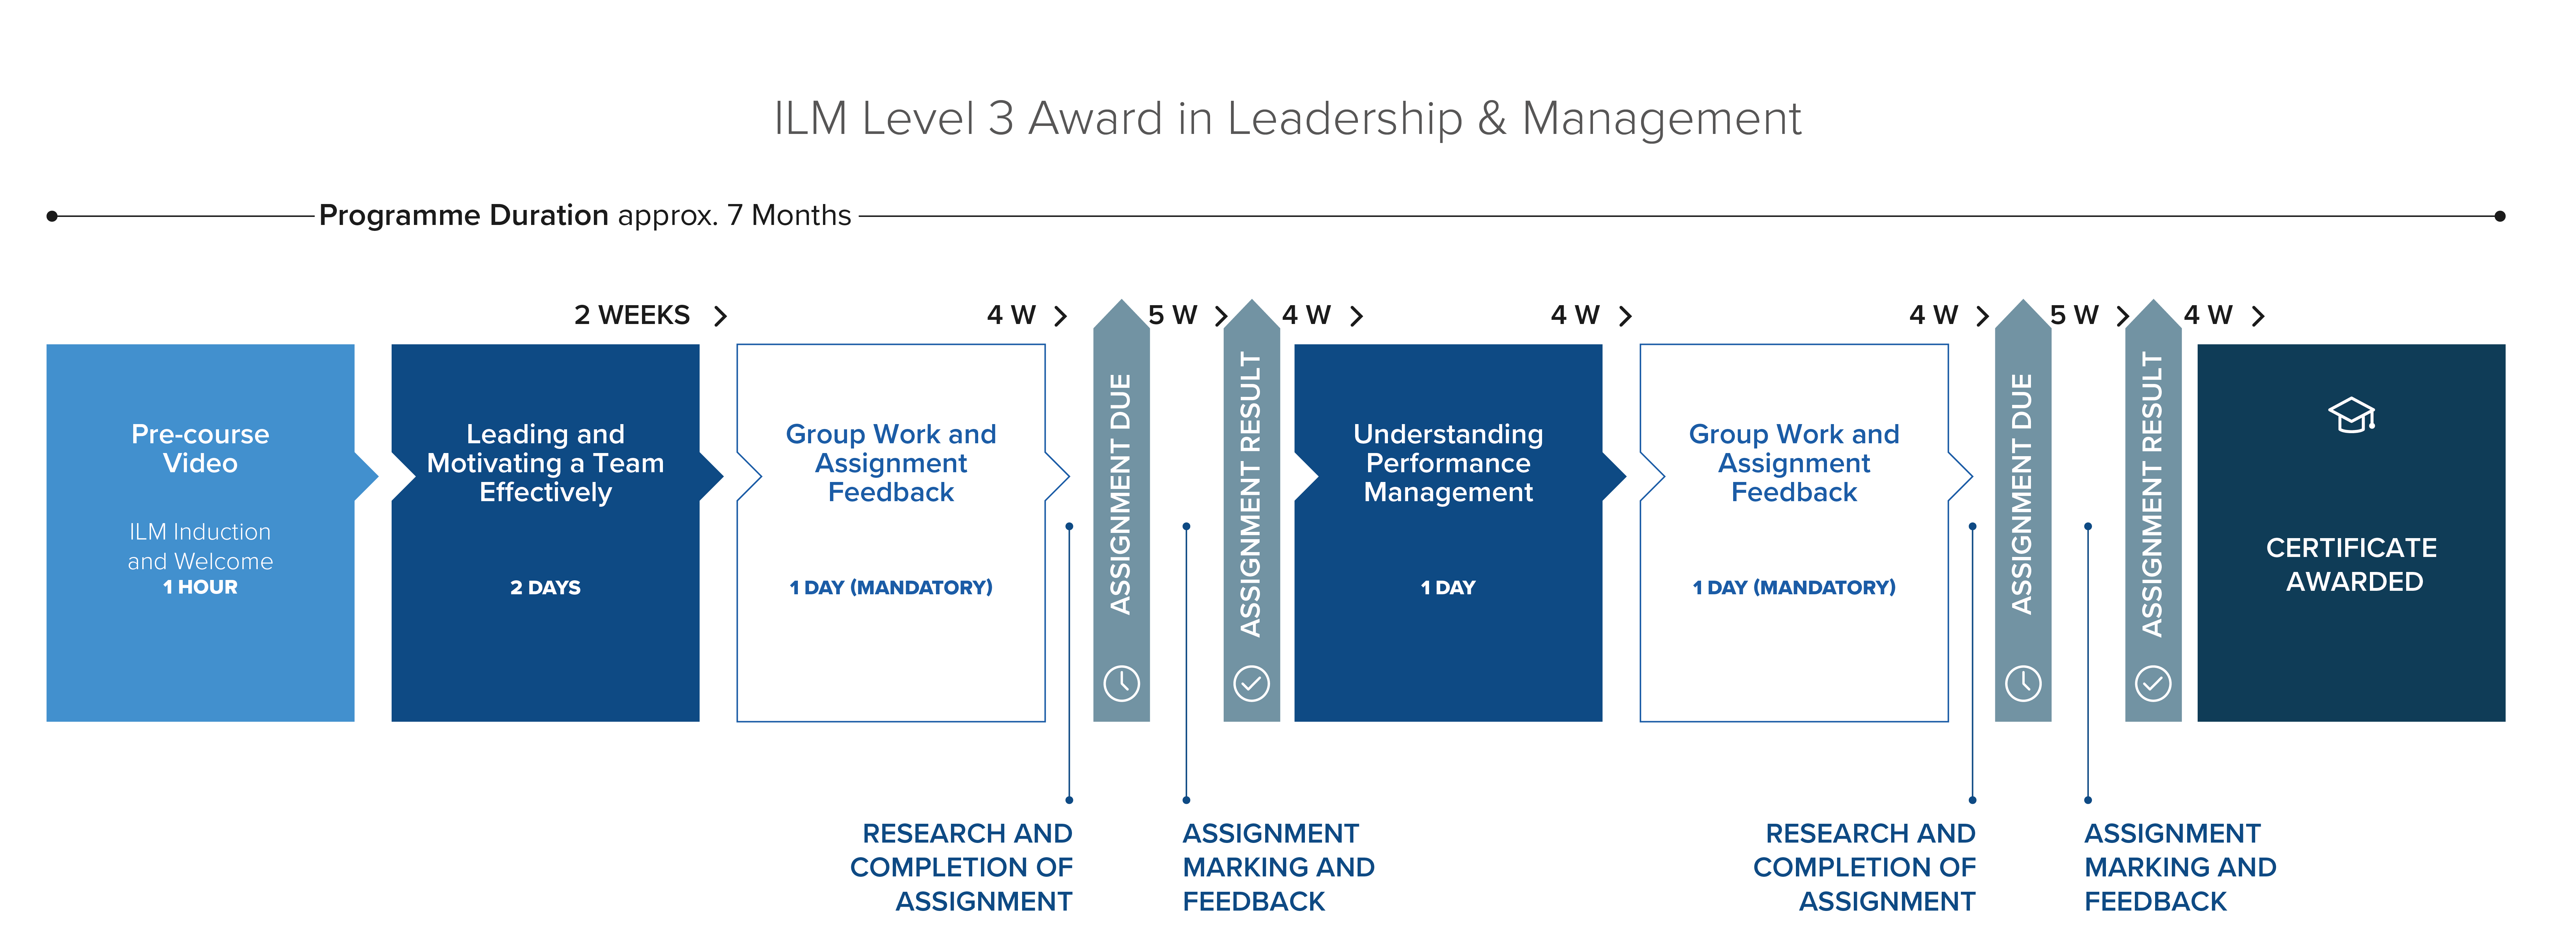 ilm level 3 understanding performance management assignment